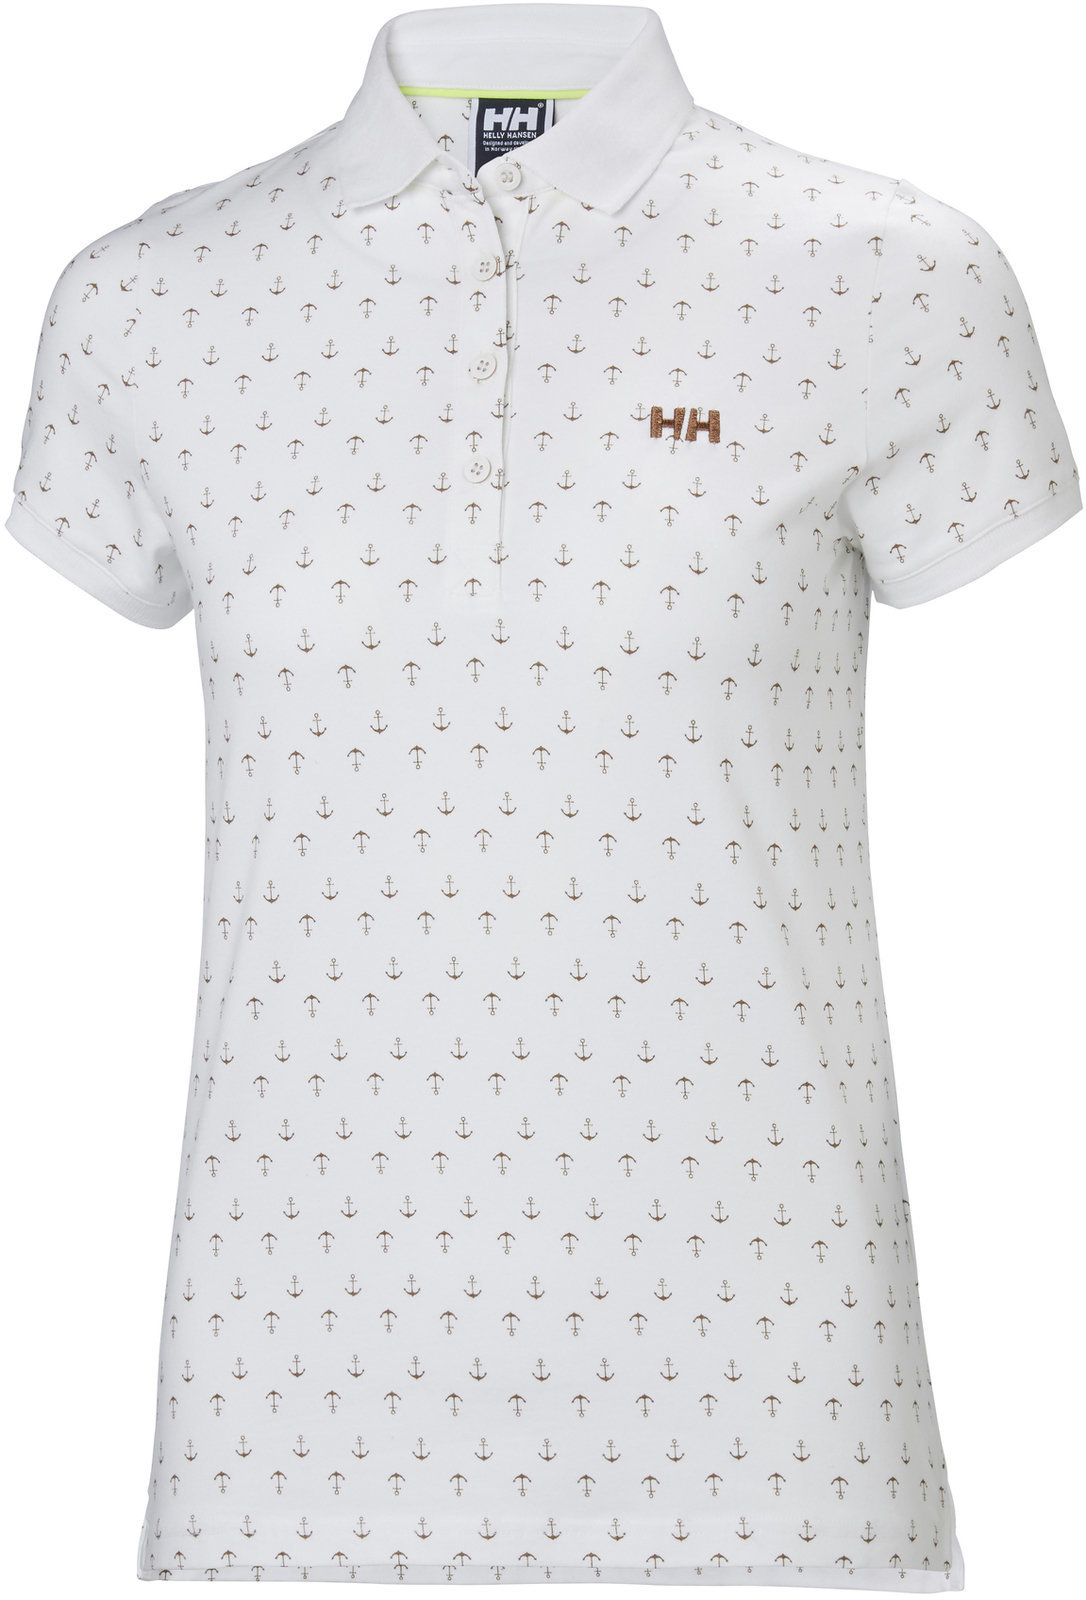 Shirt Helly Hansen W Naiad Breeze Polo White Anchor - XS